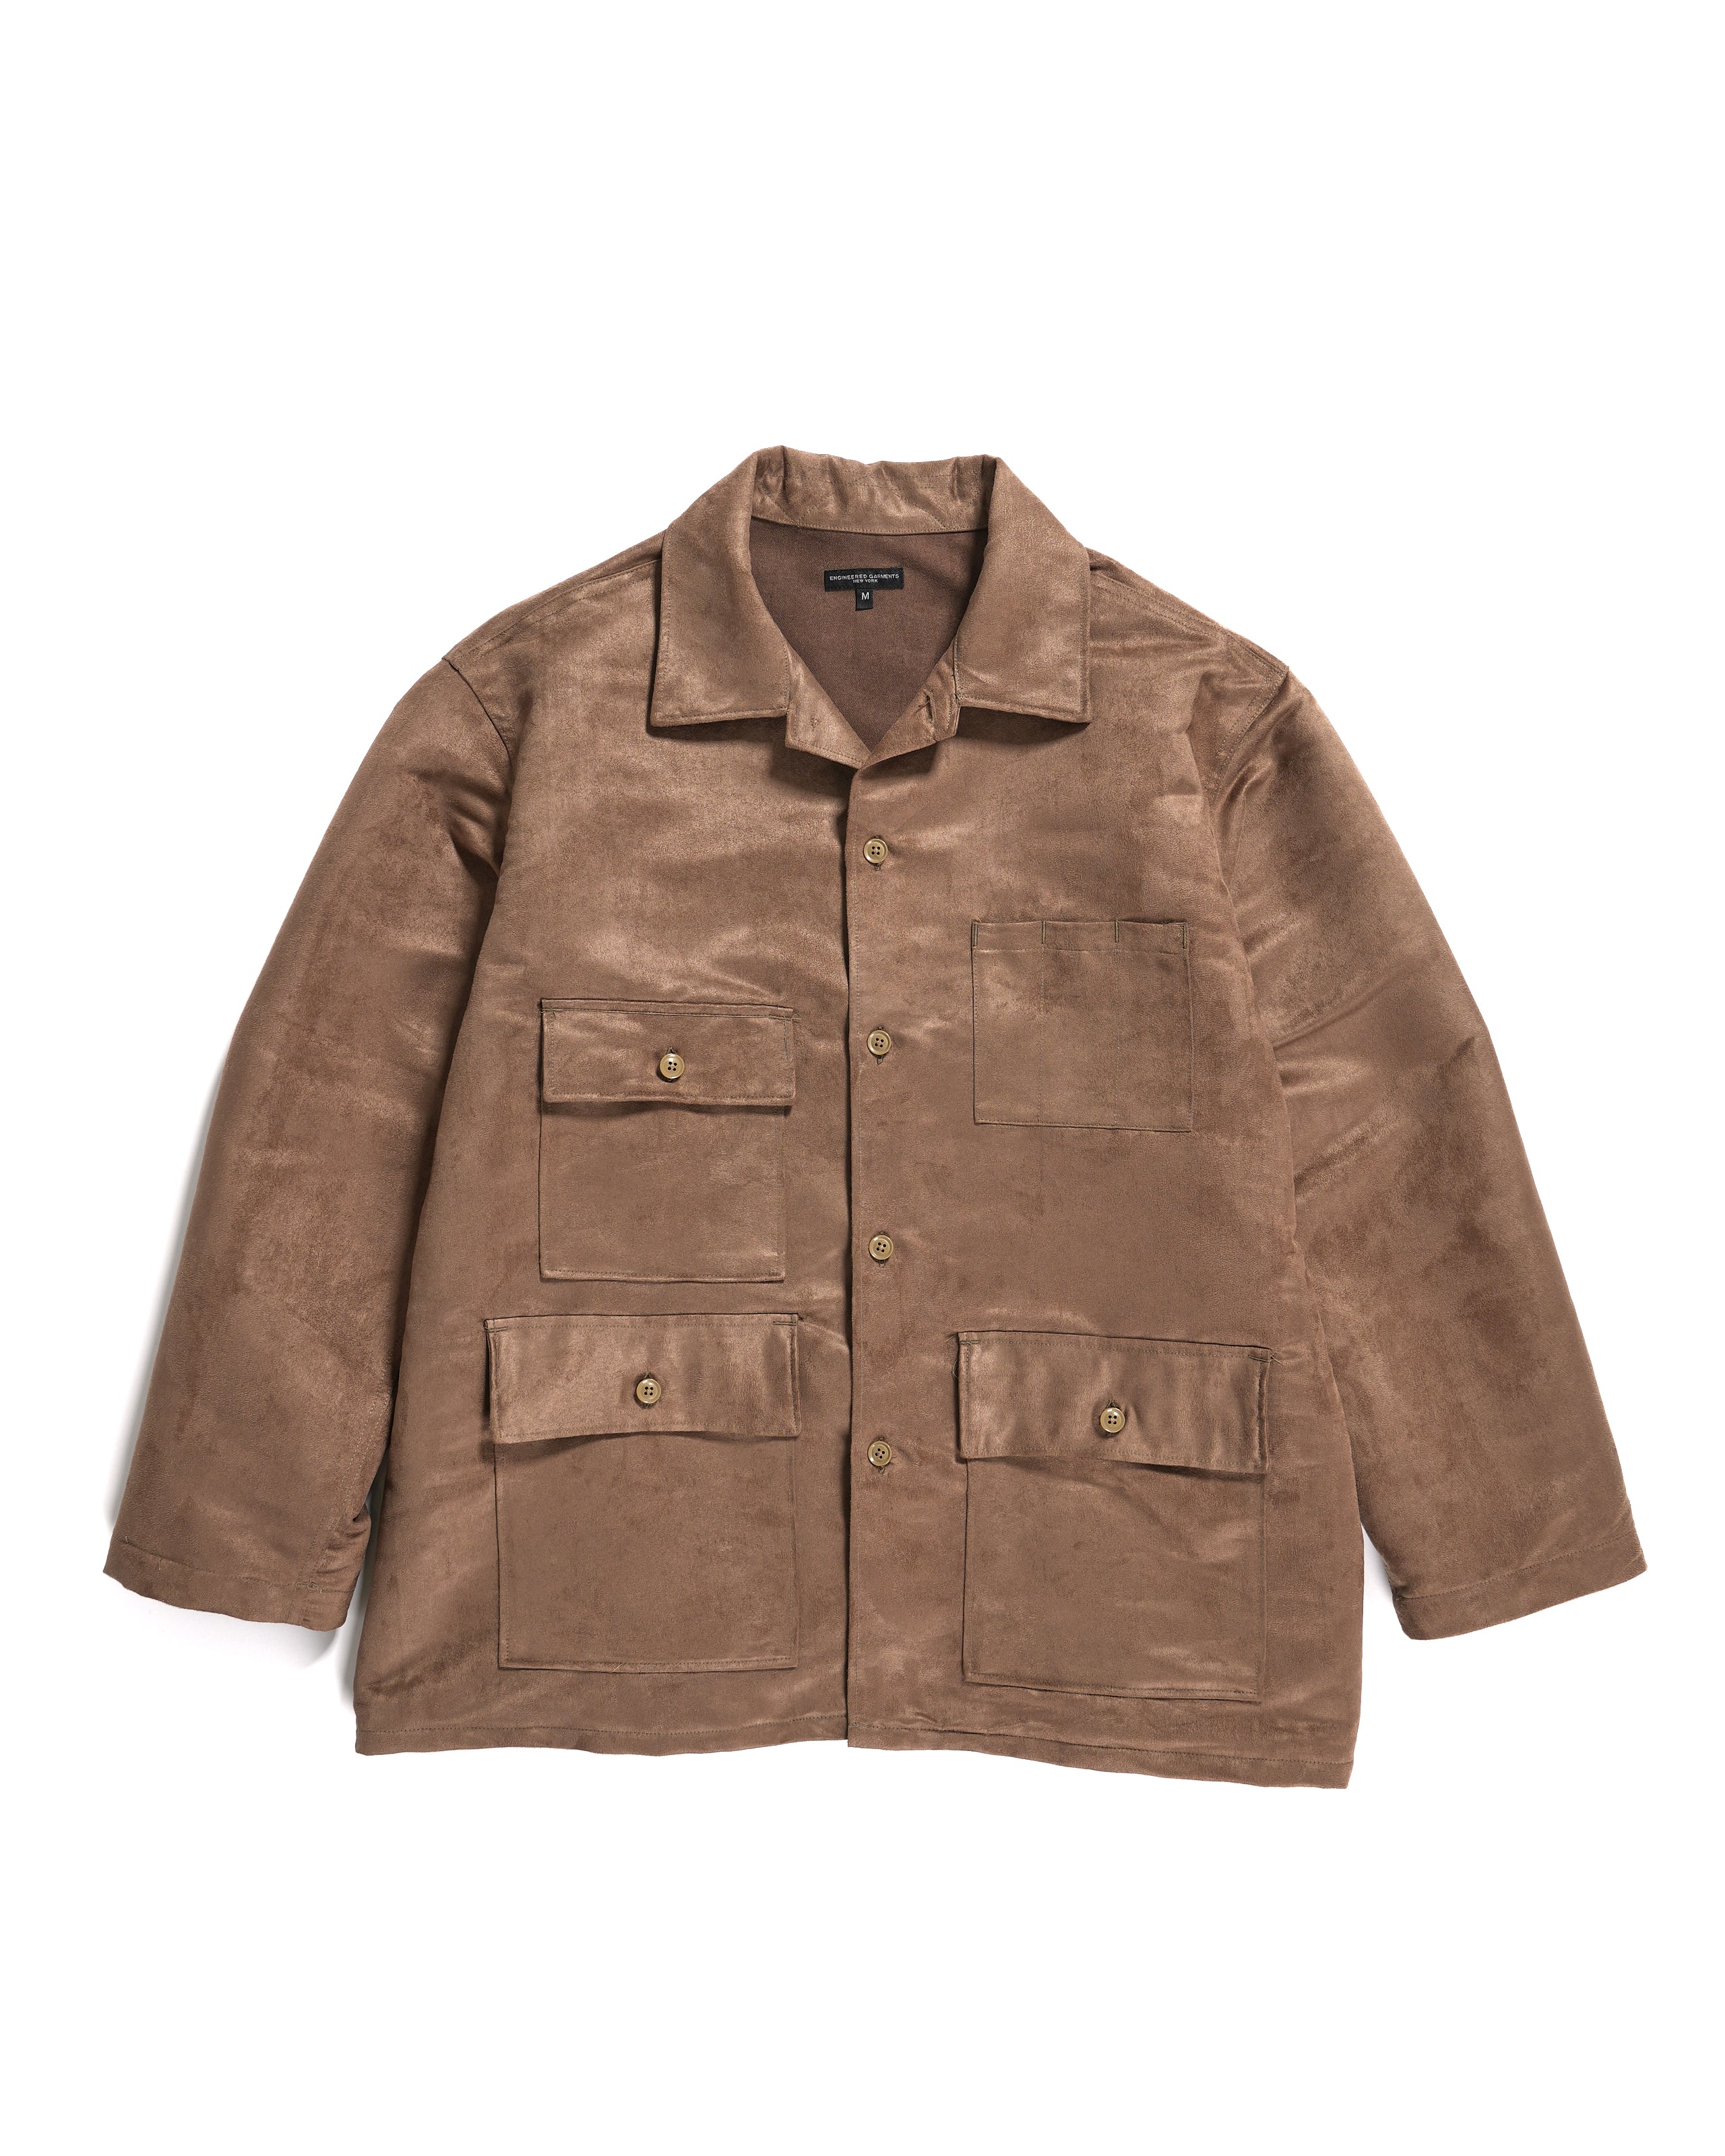 BA Shirt Jacket - Khaki Polyester Fake Suede